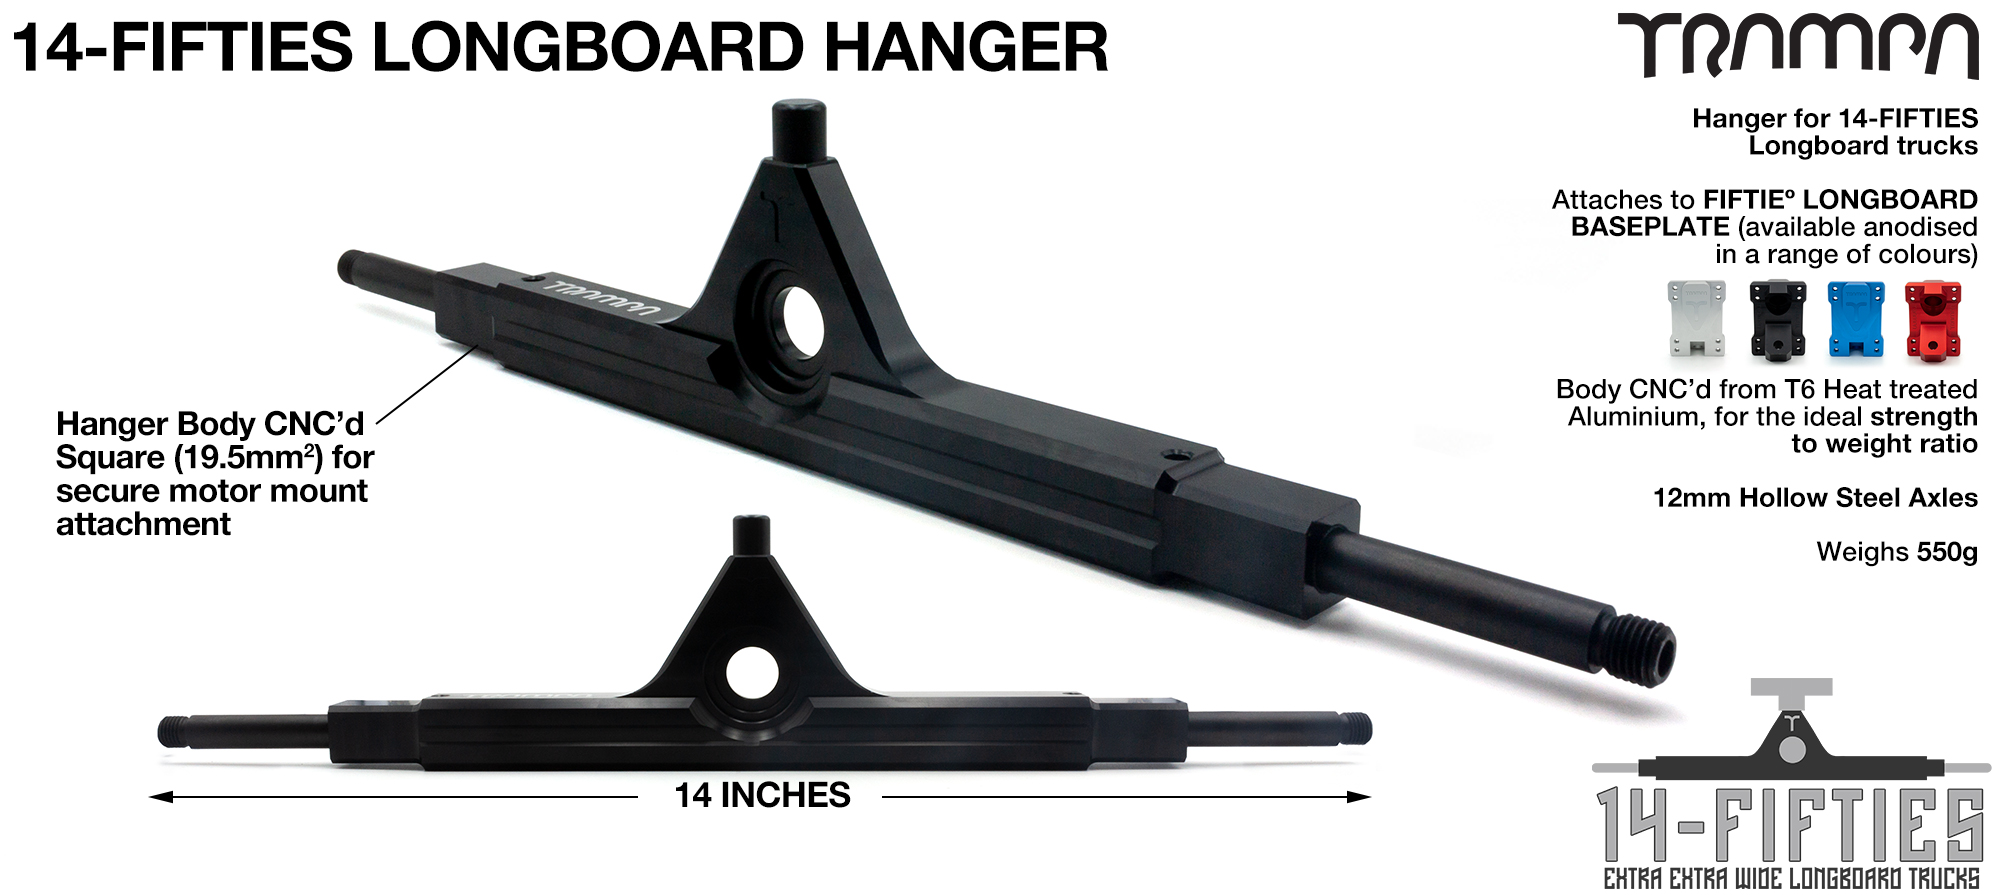 14FiFties Extra Wide Longboard Hanger 355mm with 12mm HOLLOW Steel Axles